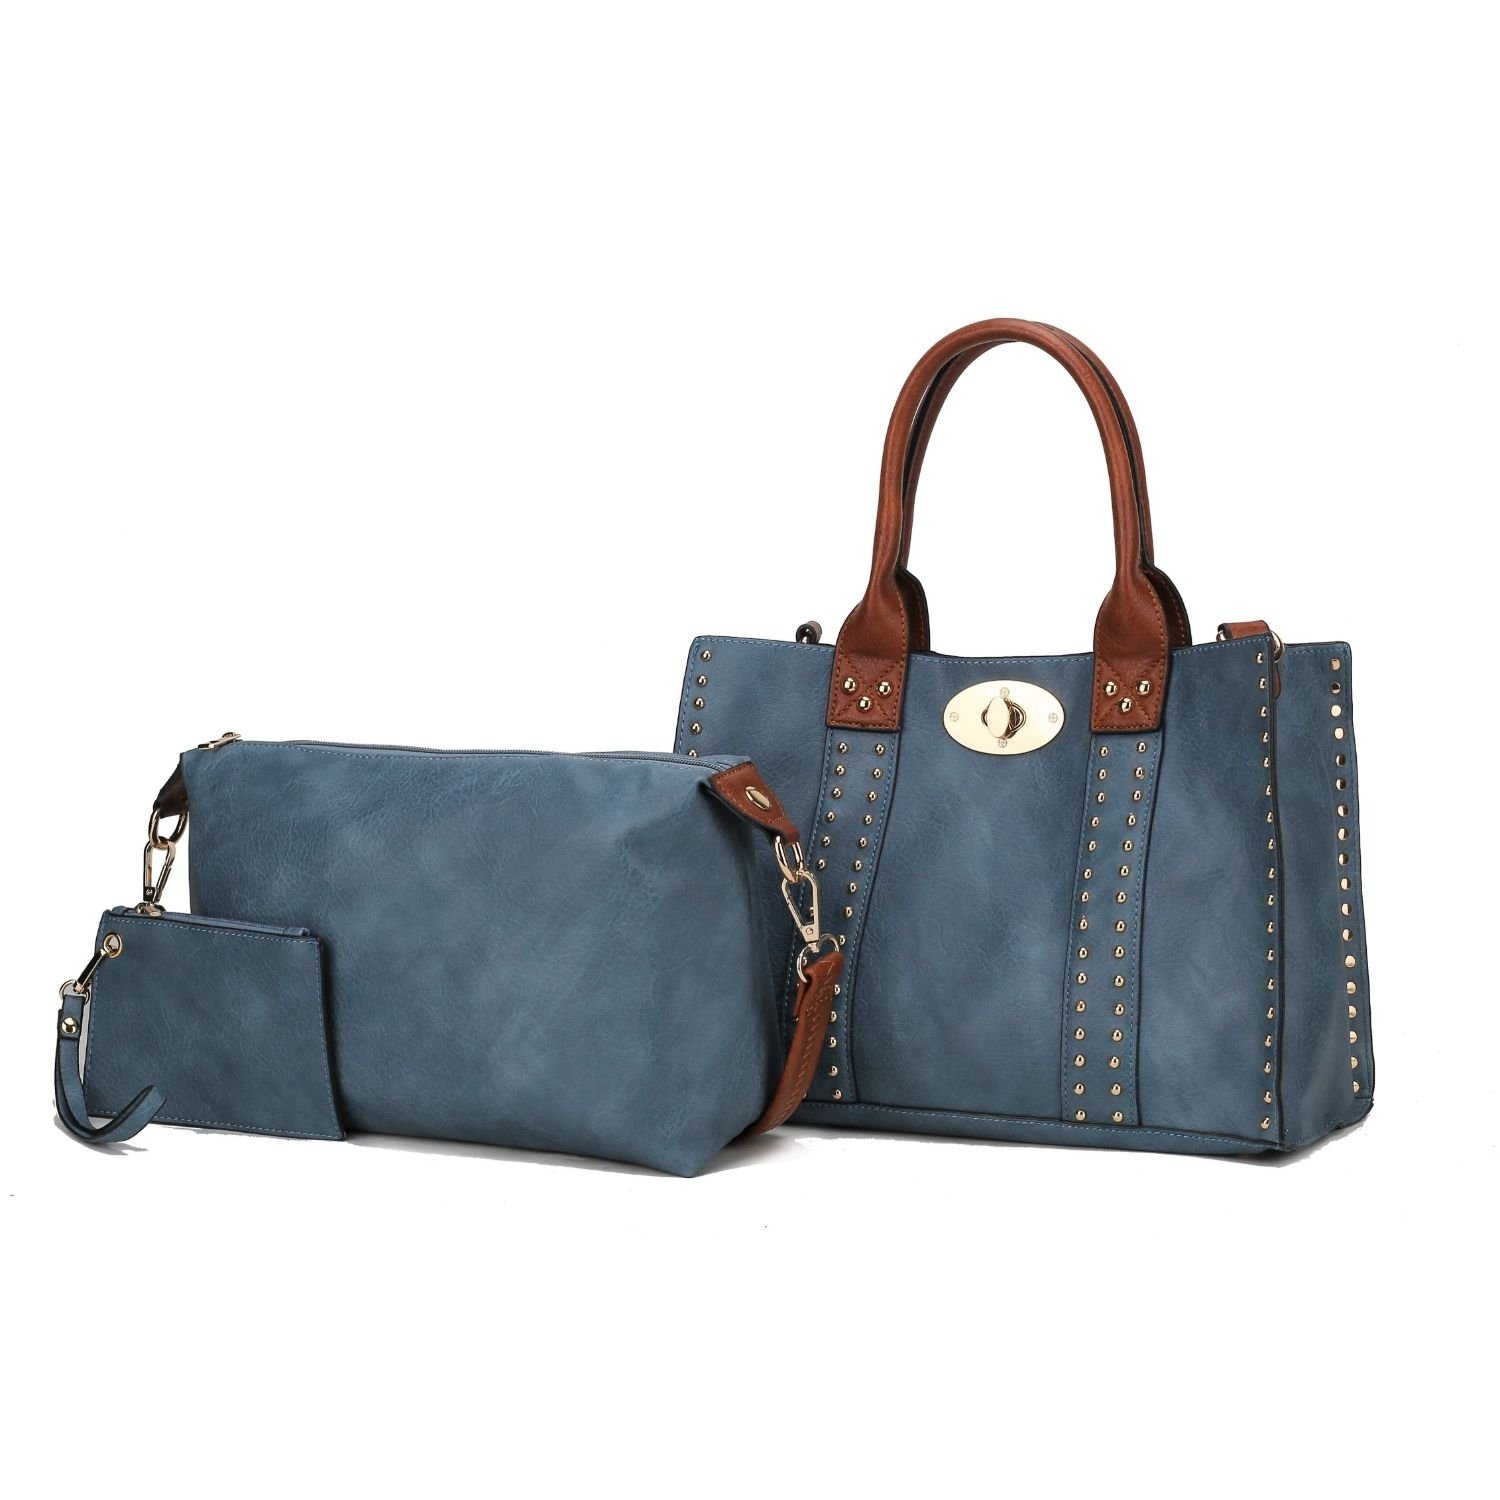 MKF Collection Elissa 3 Pc Set Satchel Handbag With Pouch & Coin Purse By Mia K. - Dark Grey-black